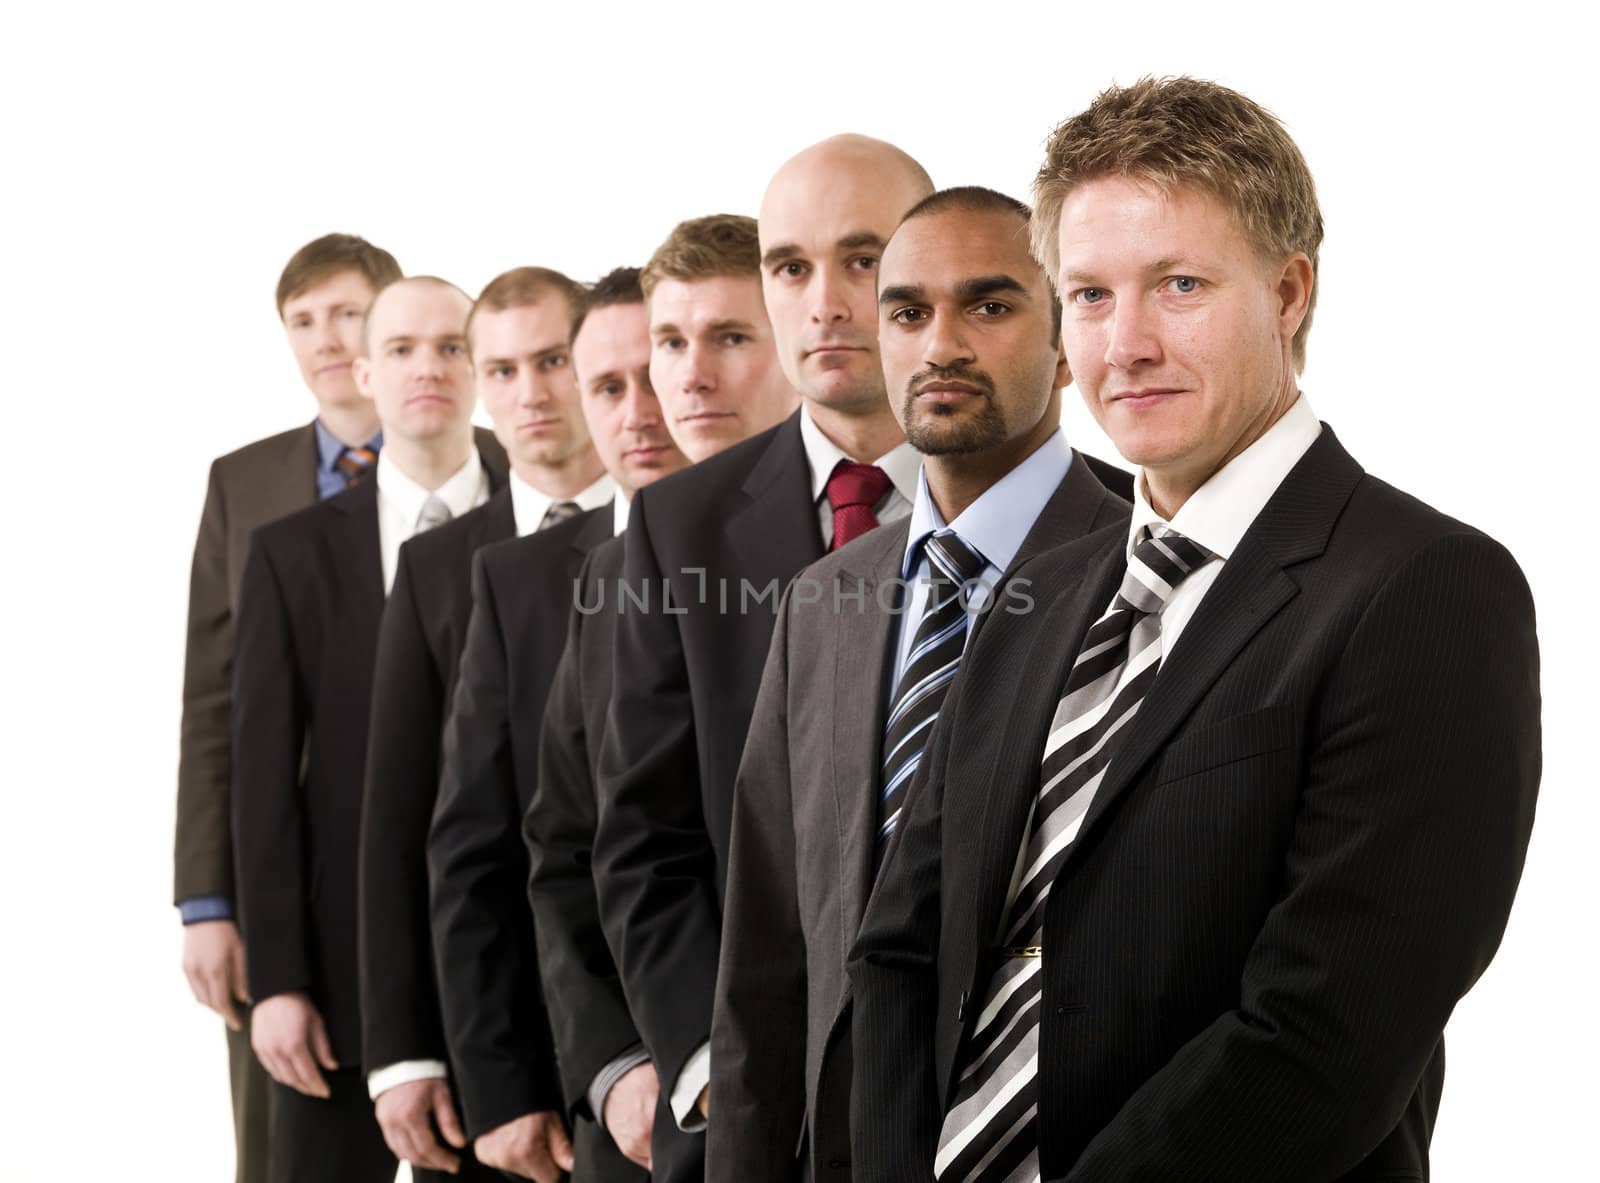 Business men in a row by gemenacom